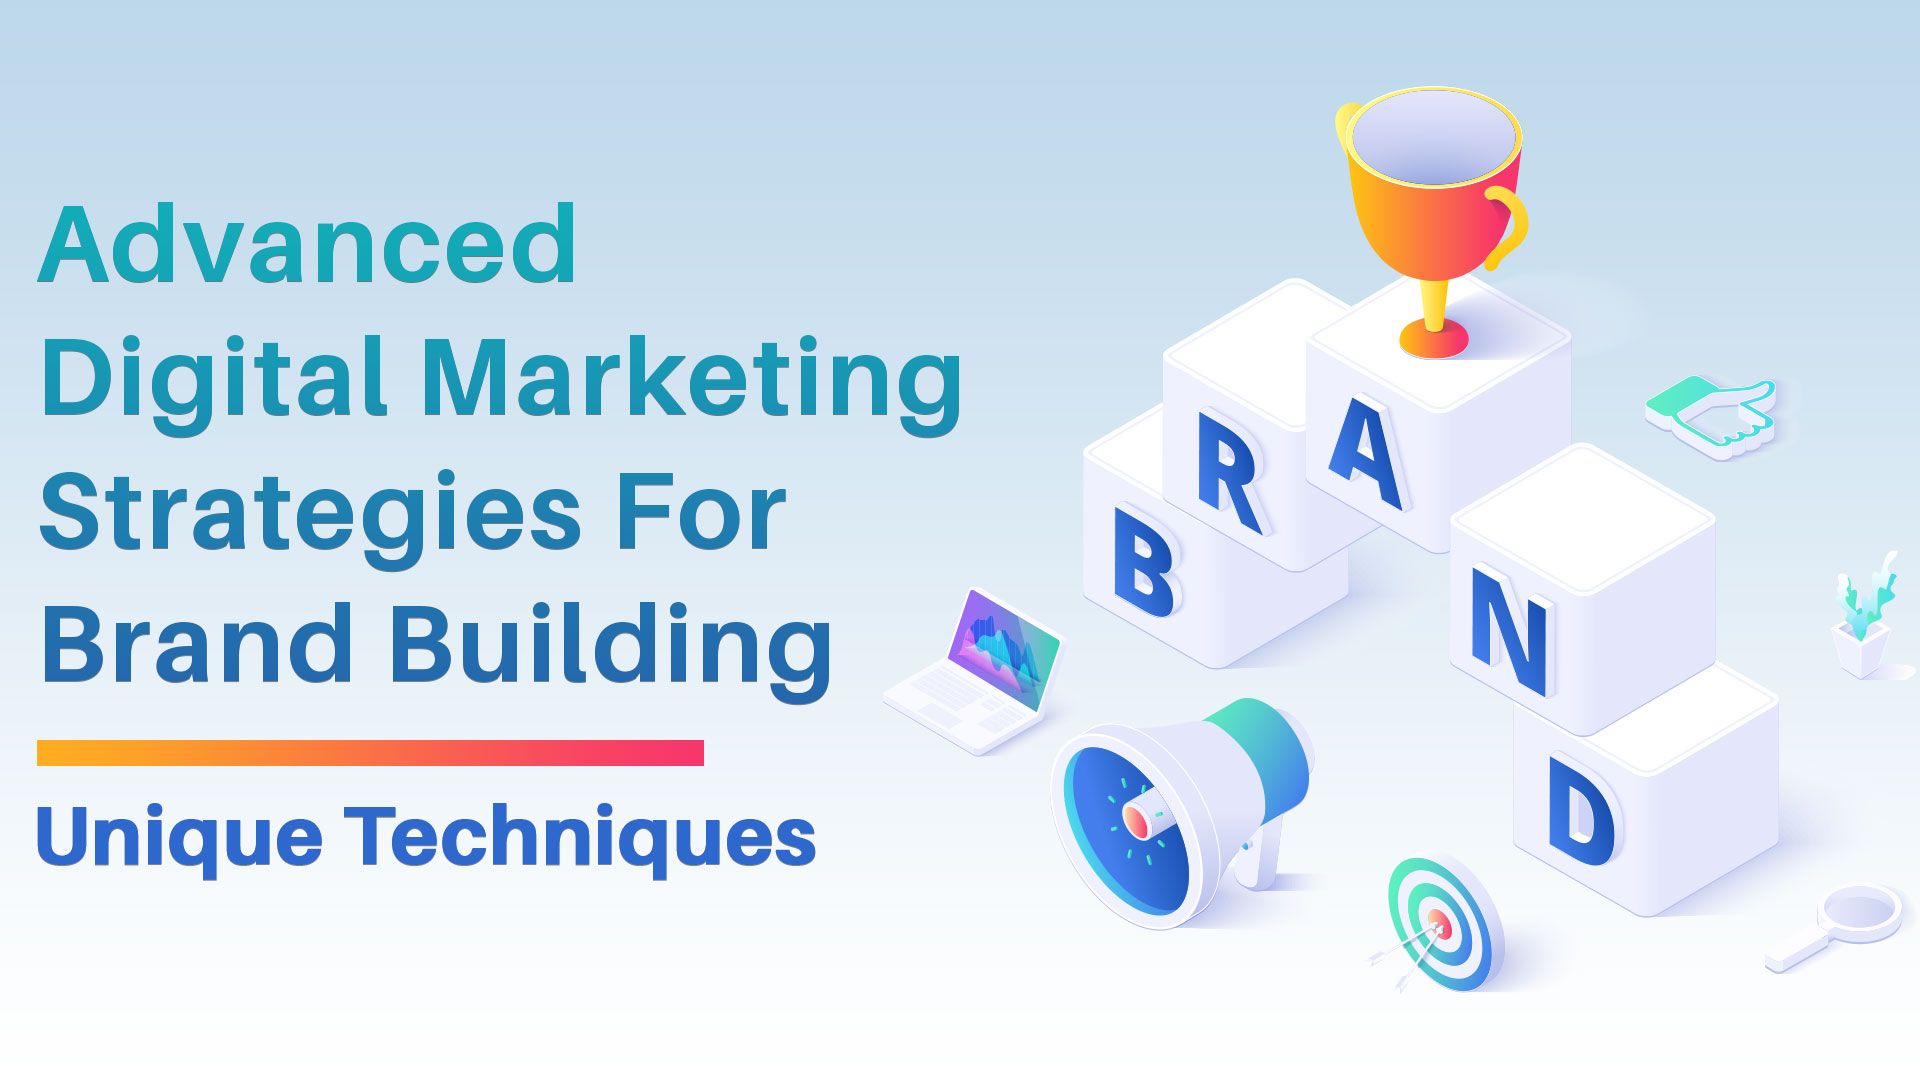 Advanced Digital Marketing Strategies For Brand Building New Methods